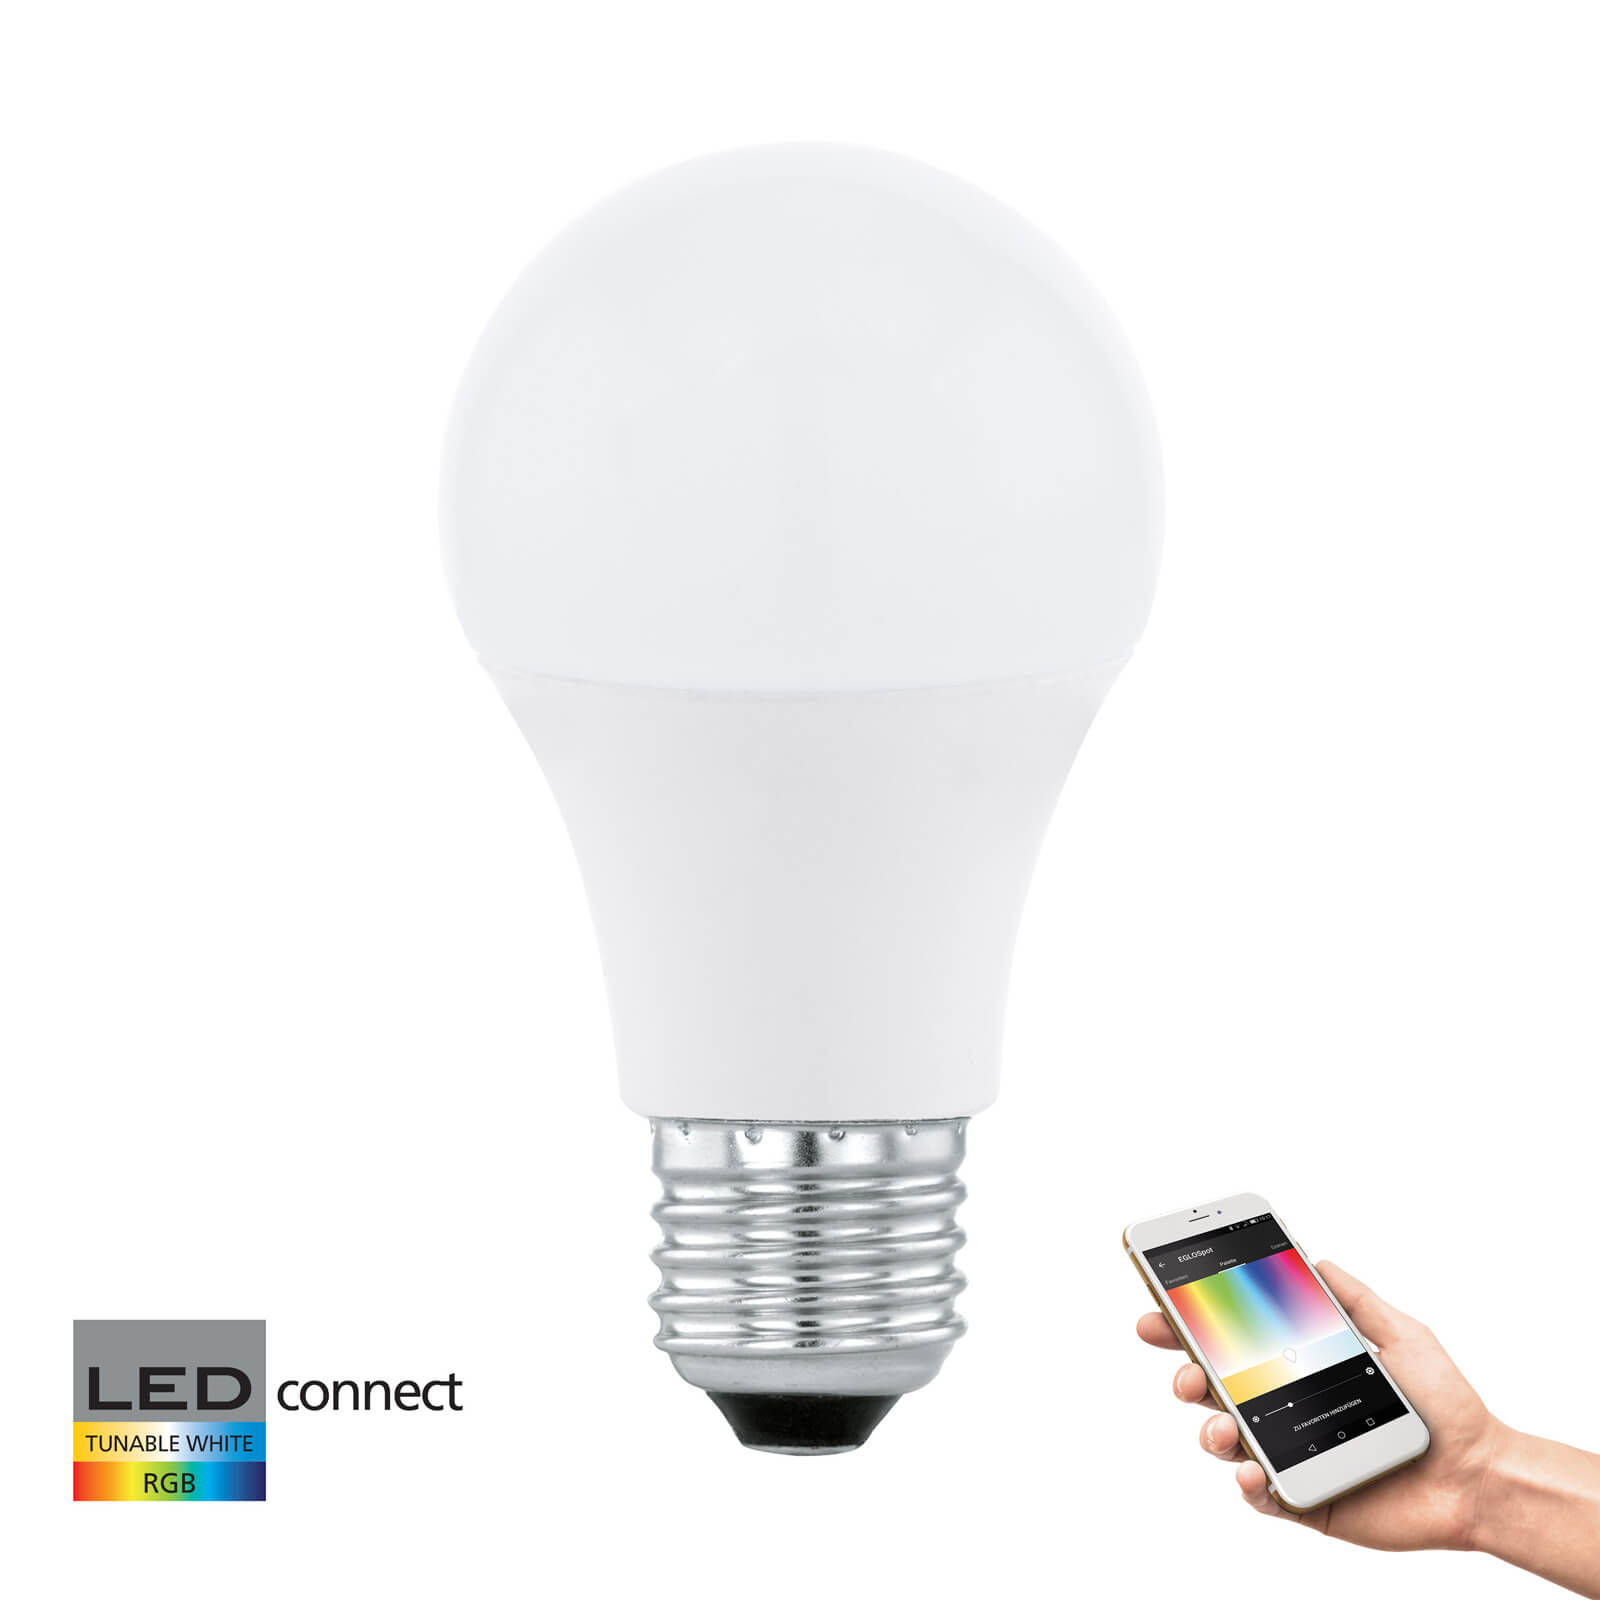 Eglo Connect LED Lamp 9W E27, White and Color